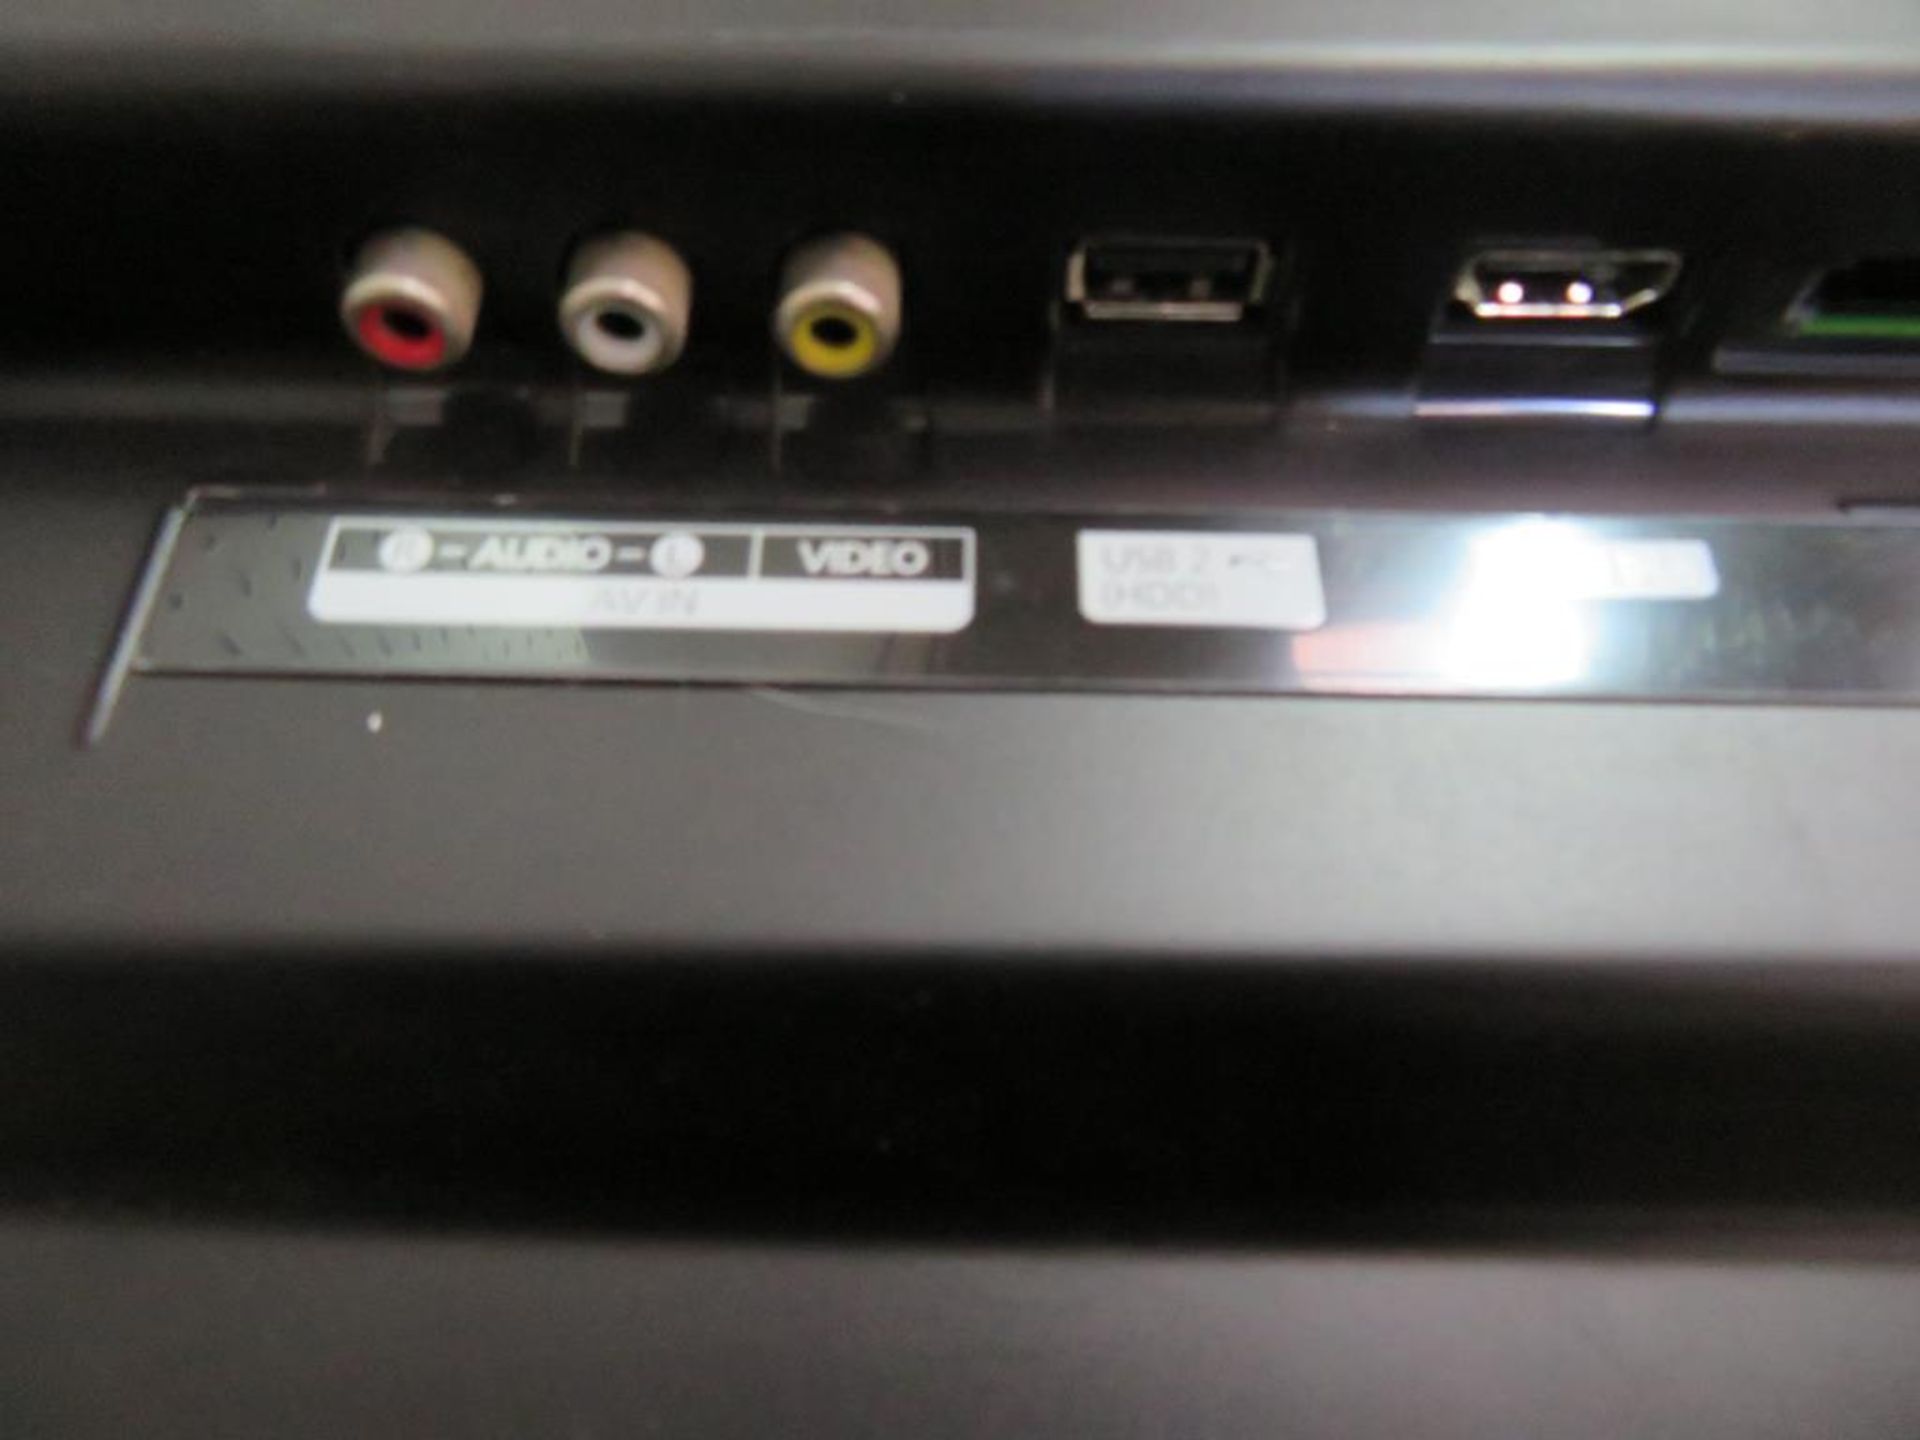 Samsung PS50C550G1WXXU 50" Plasma TV in box - Image 10 of 11